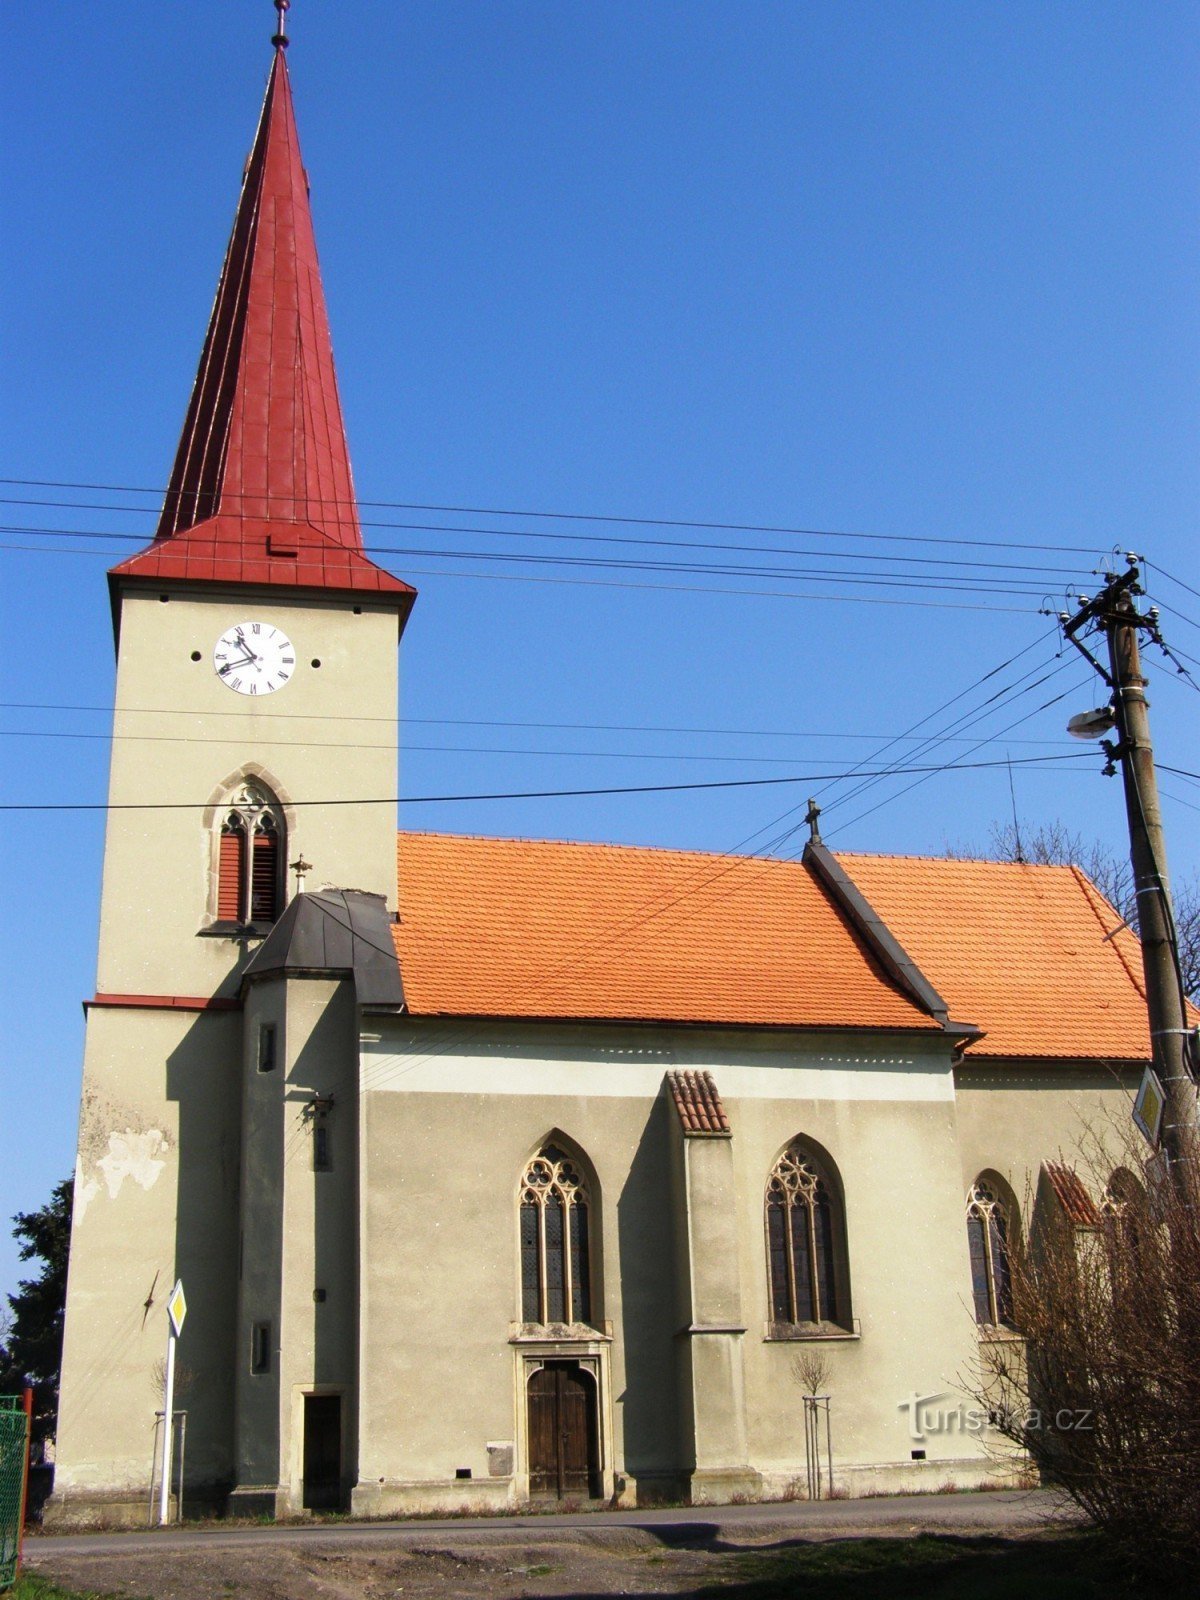 Kunětice - igreja de St. Bartolomeu